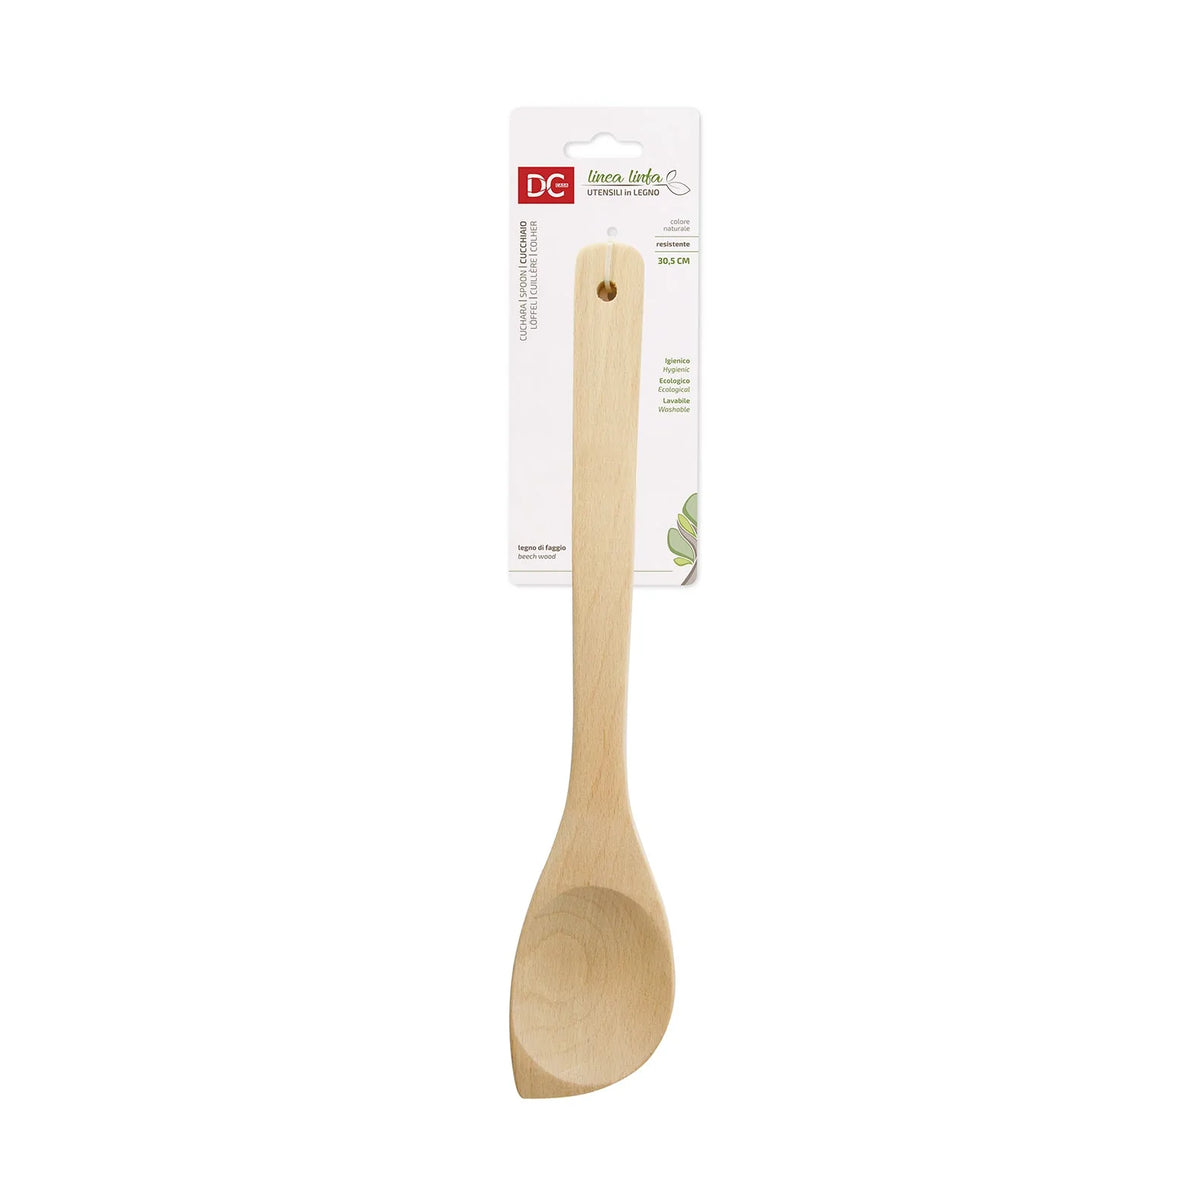 Spoon od bukovog drveta - 30,5 cm